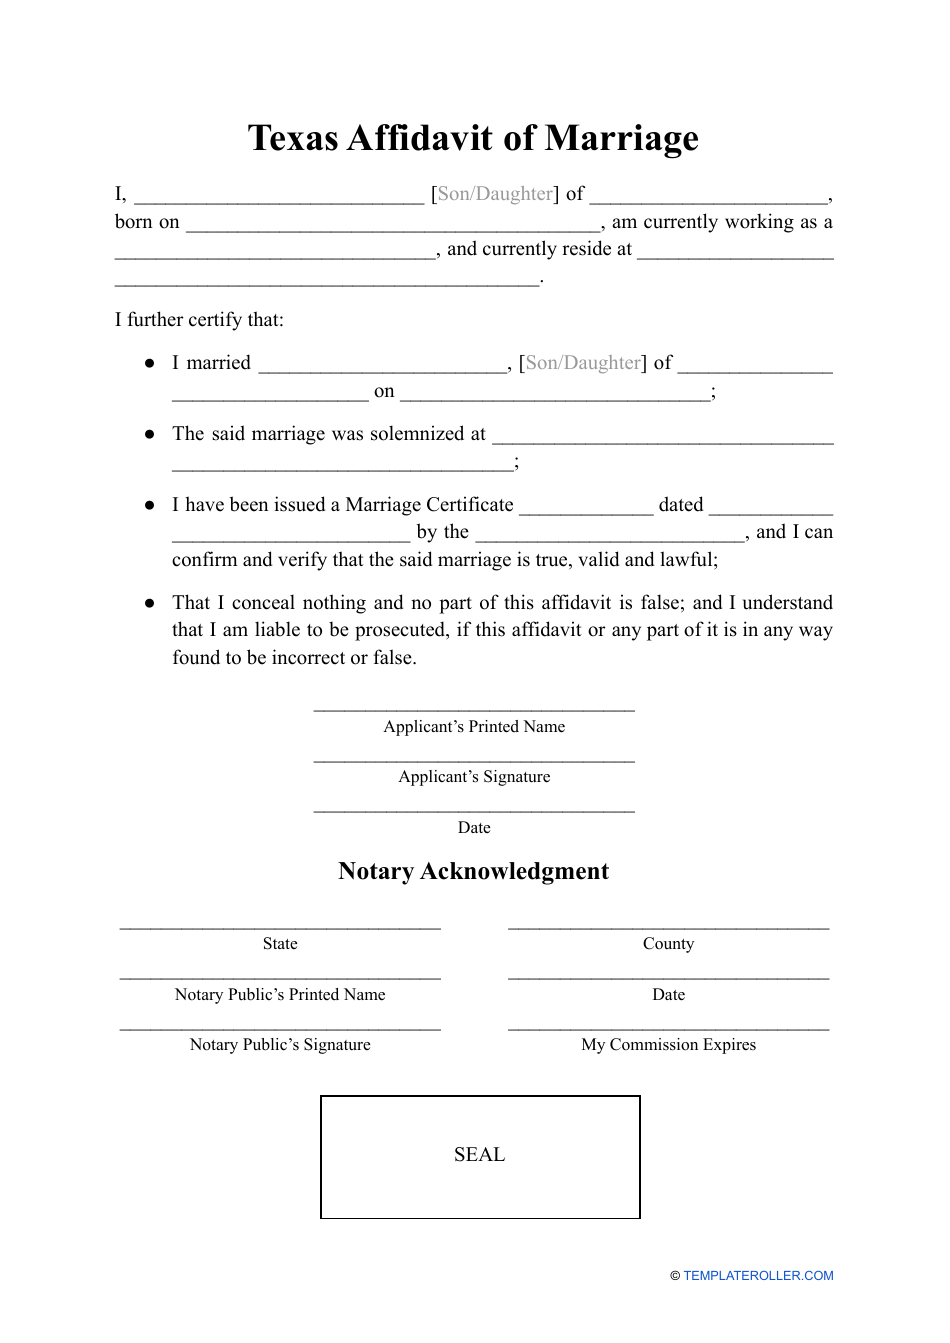 Affidavit of Marriage - Texas, Page 1